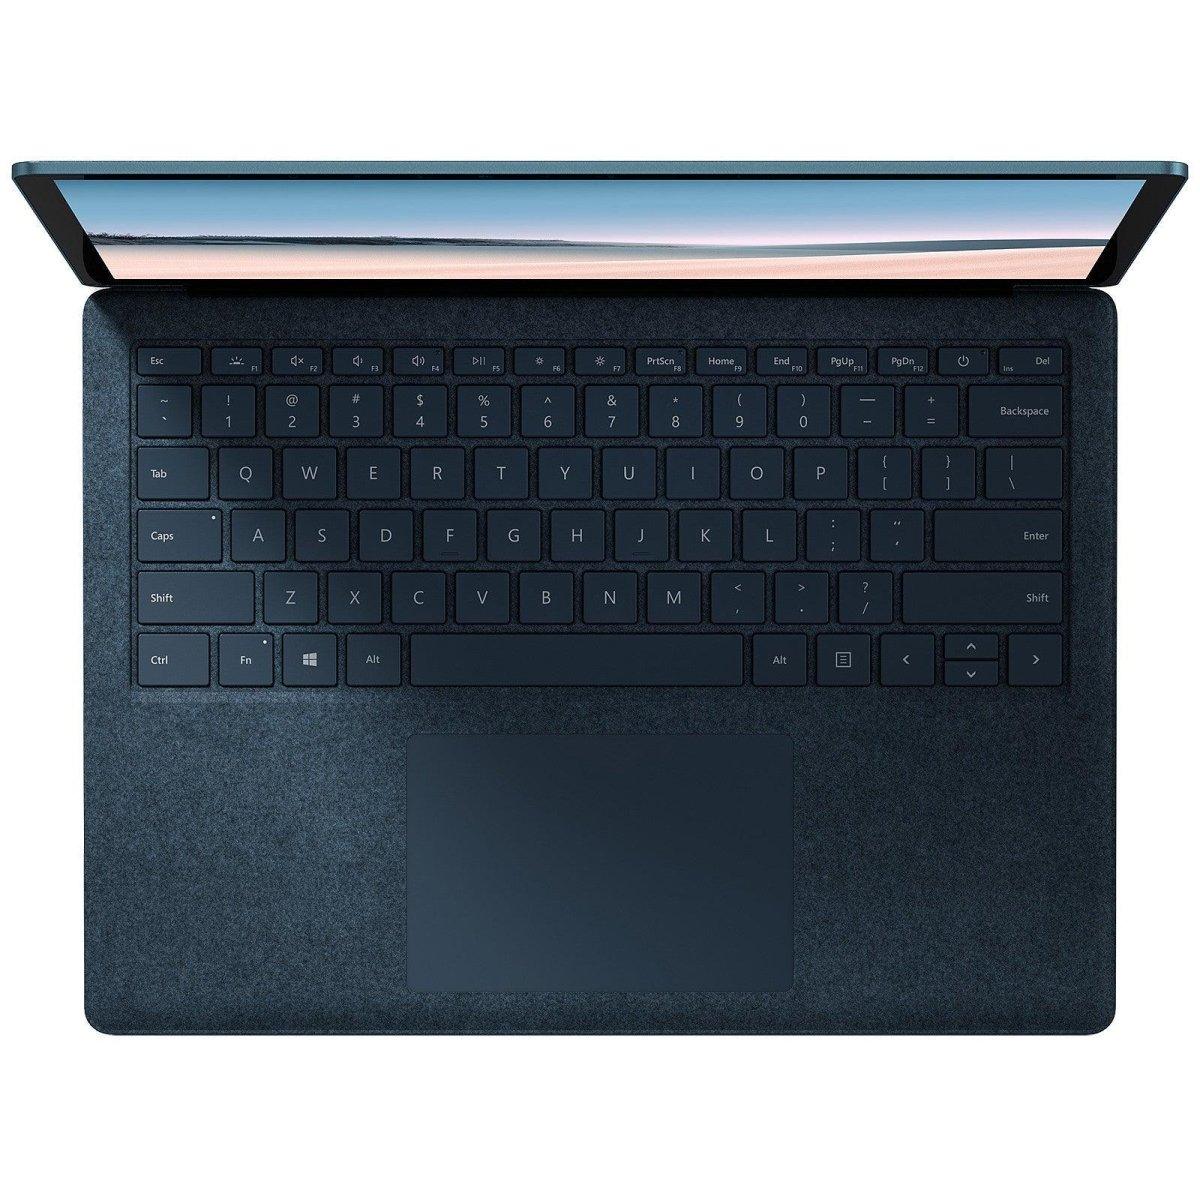 PC Portable Microsoft Surface Laptop 3 Maroc Prix pas cher - smartmarket.ma